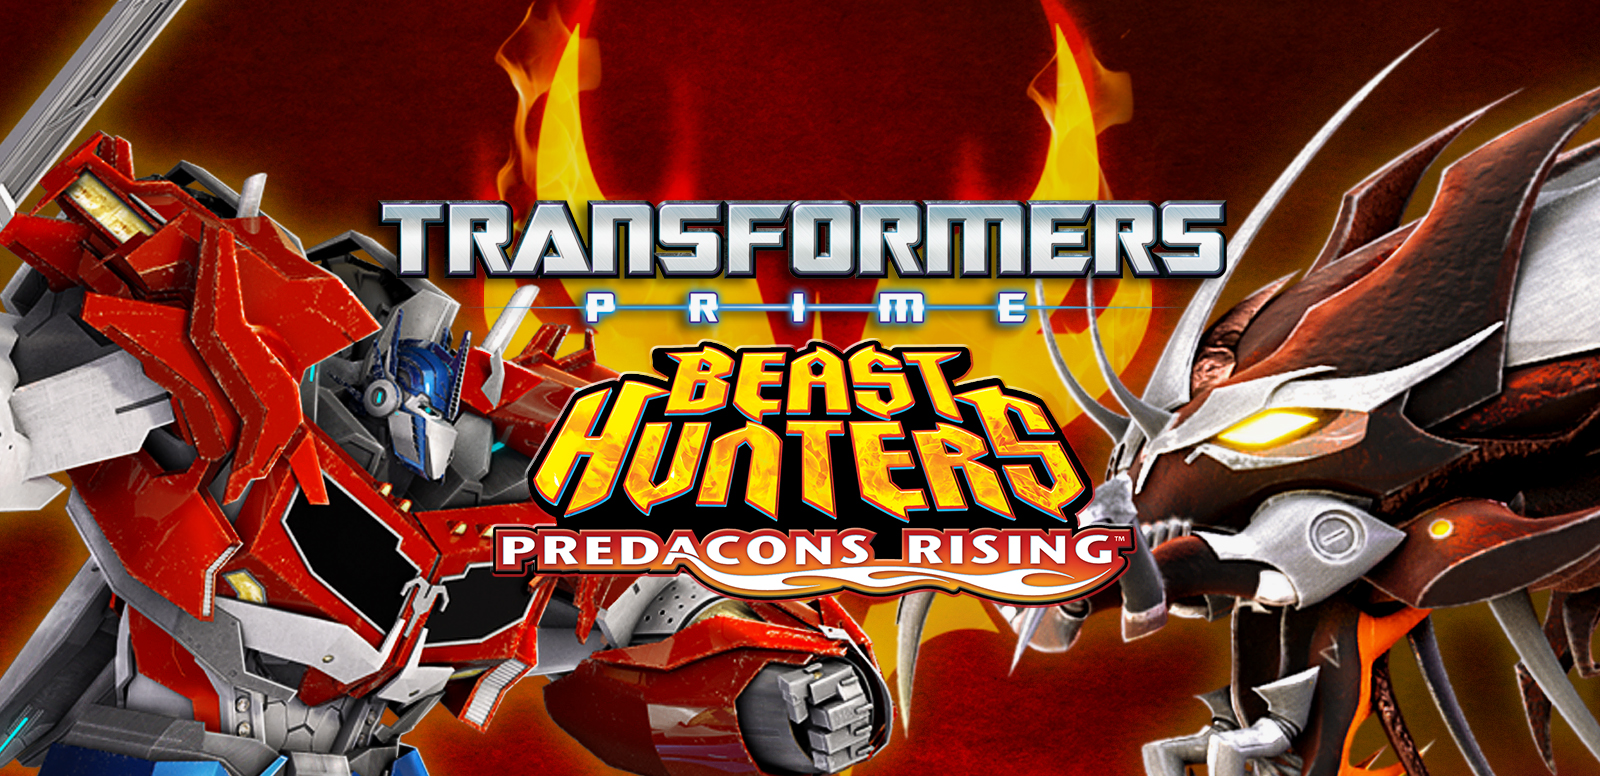 Transformers prime beast. Transformers Prime Predacons. Transformers Prime Beast Hunters. Predacons Rising. Transformers Beast Hunters Predacons.